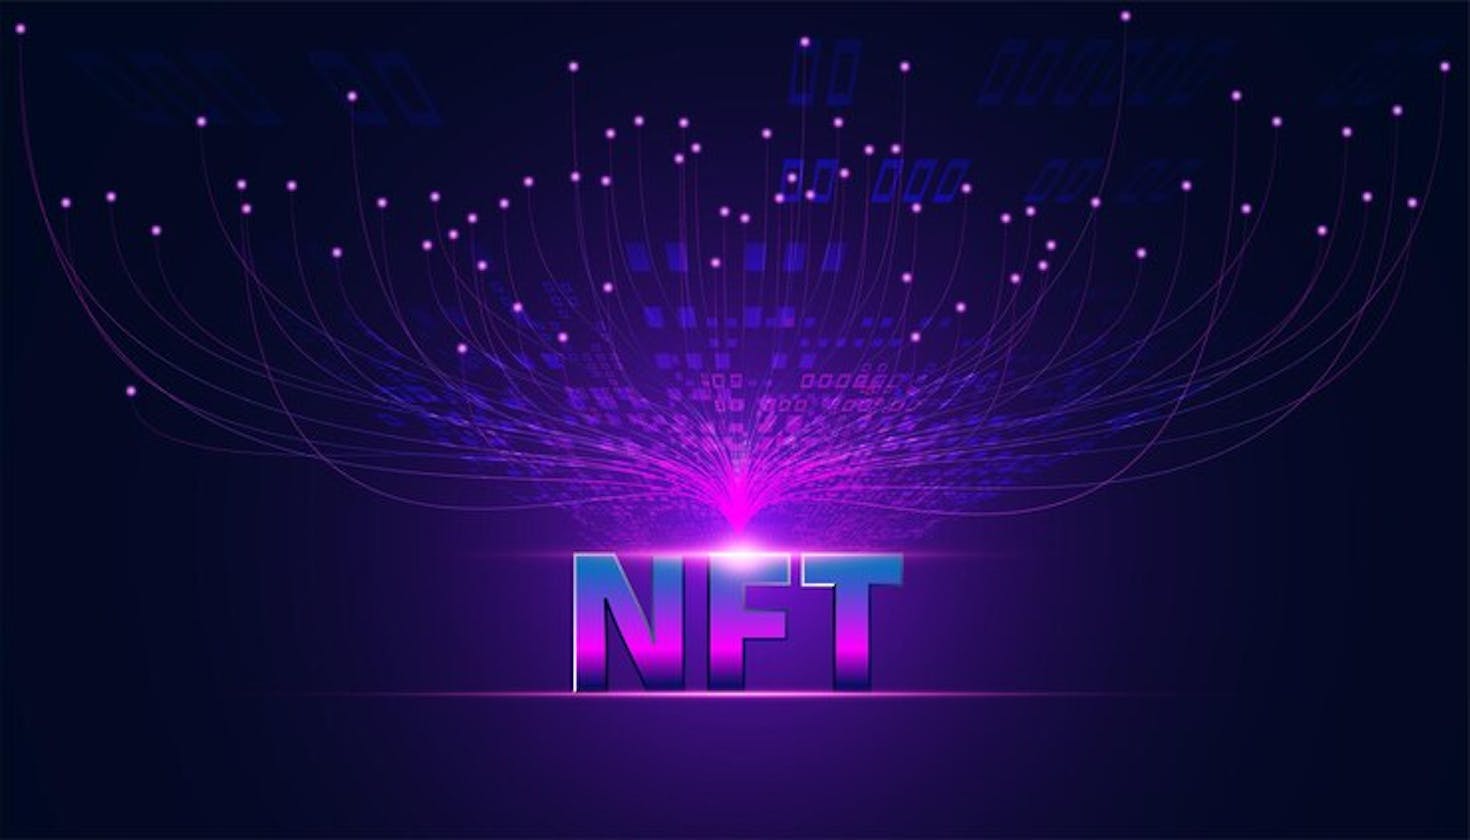 NFT Marketplace Development - go through the flow to carve your future